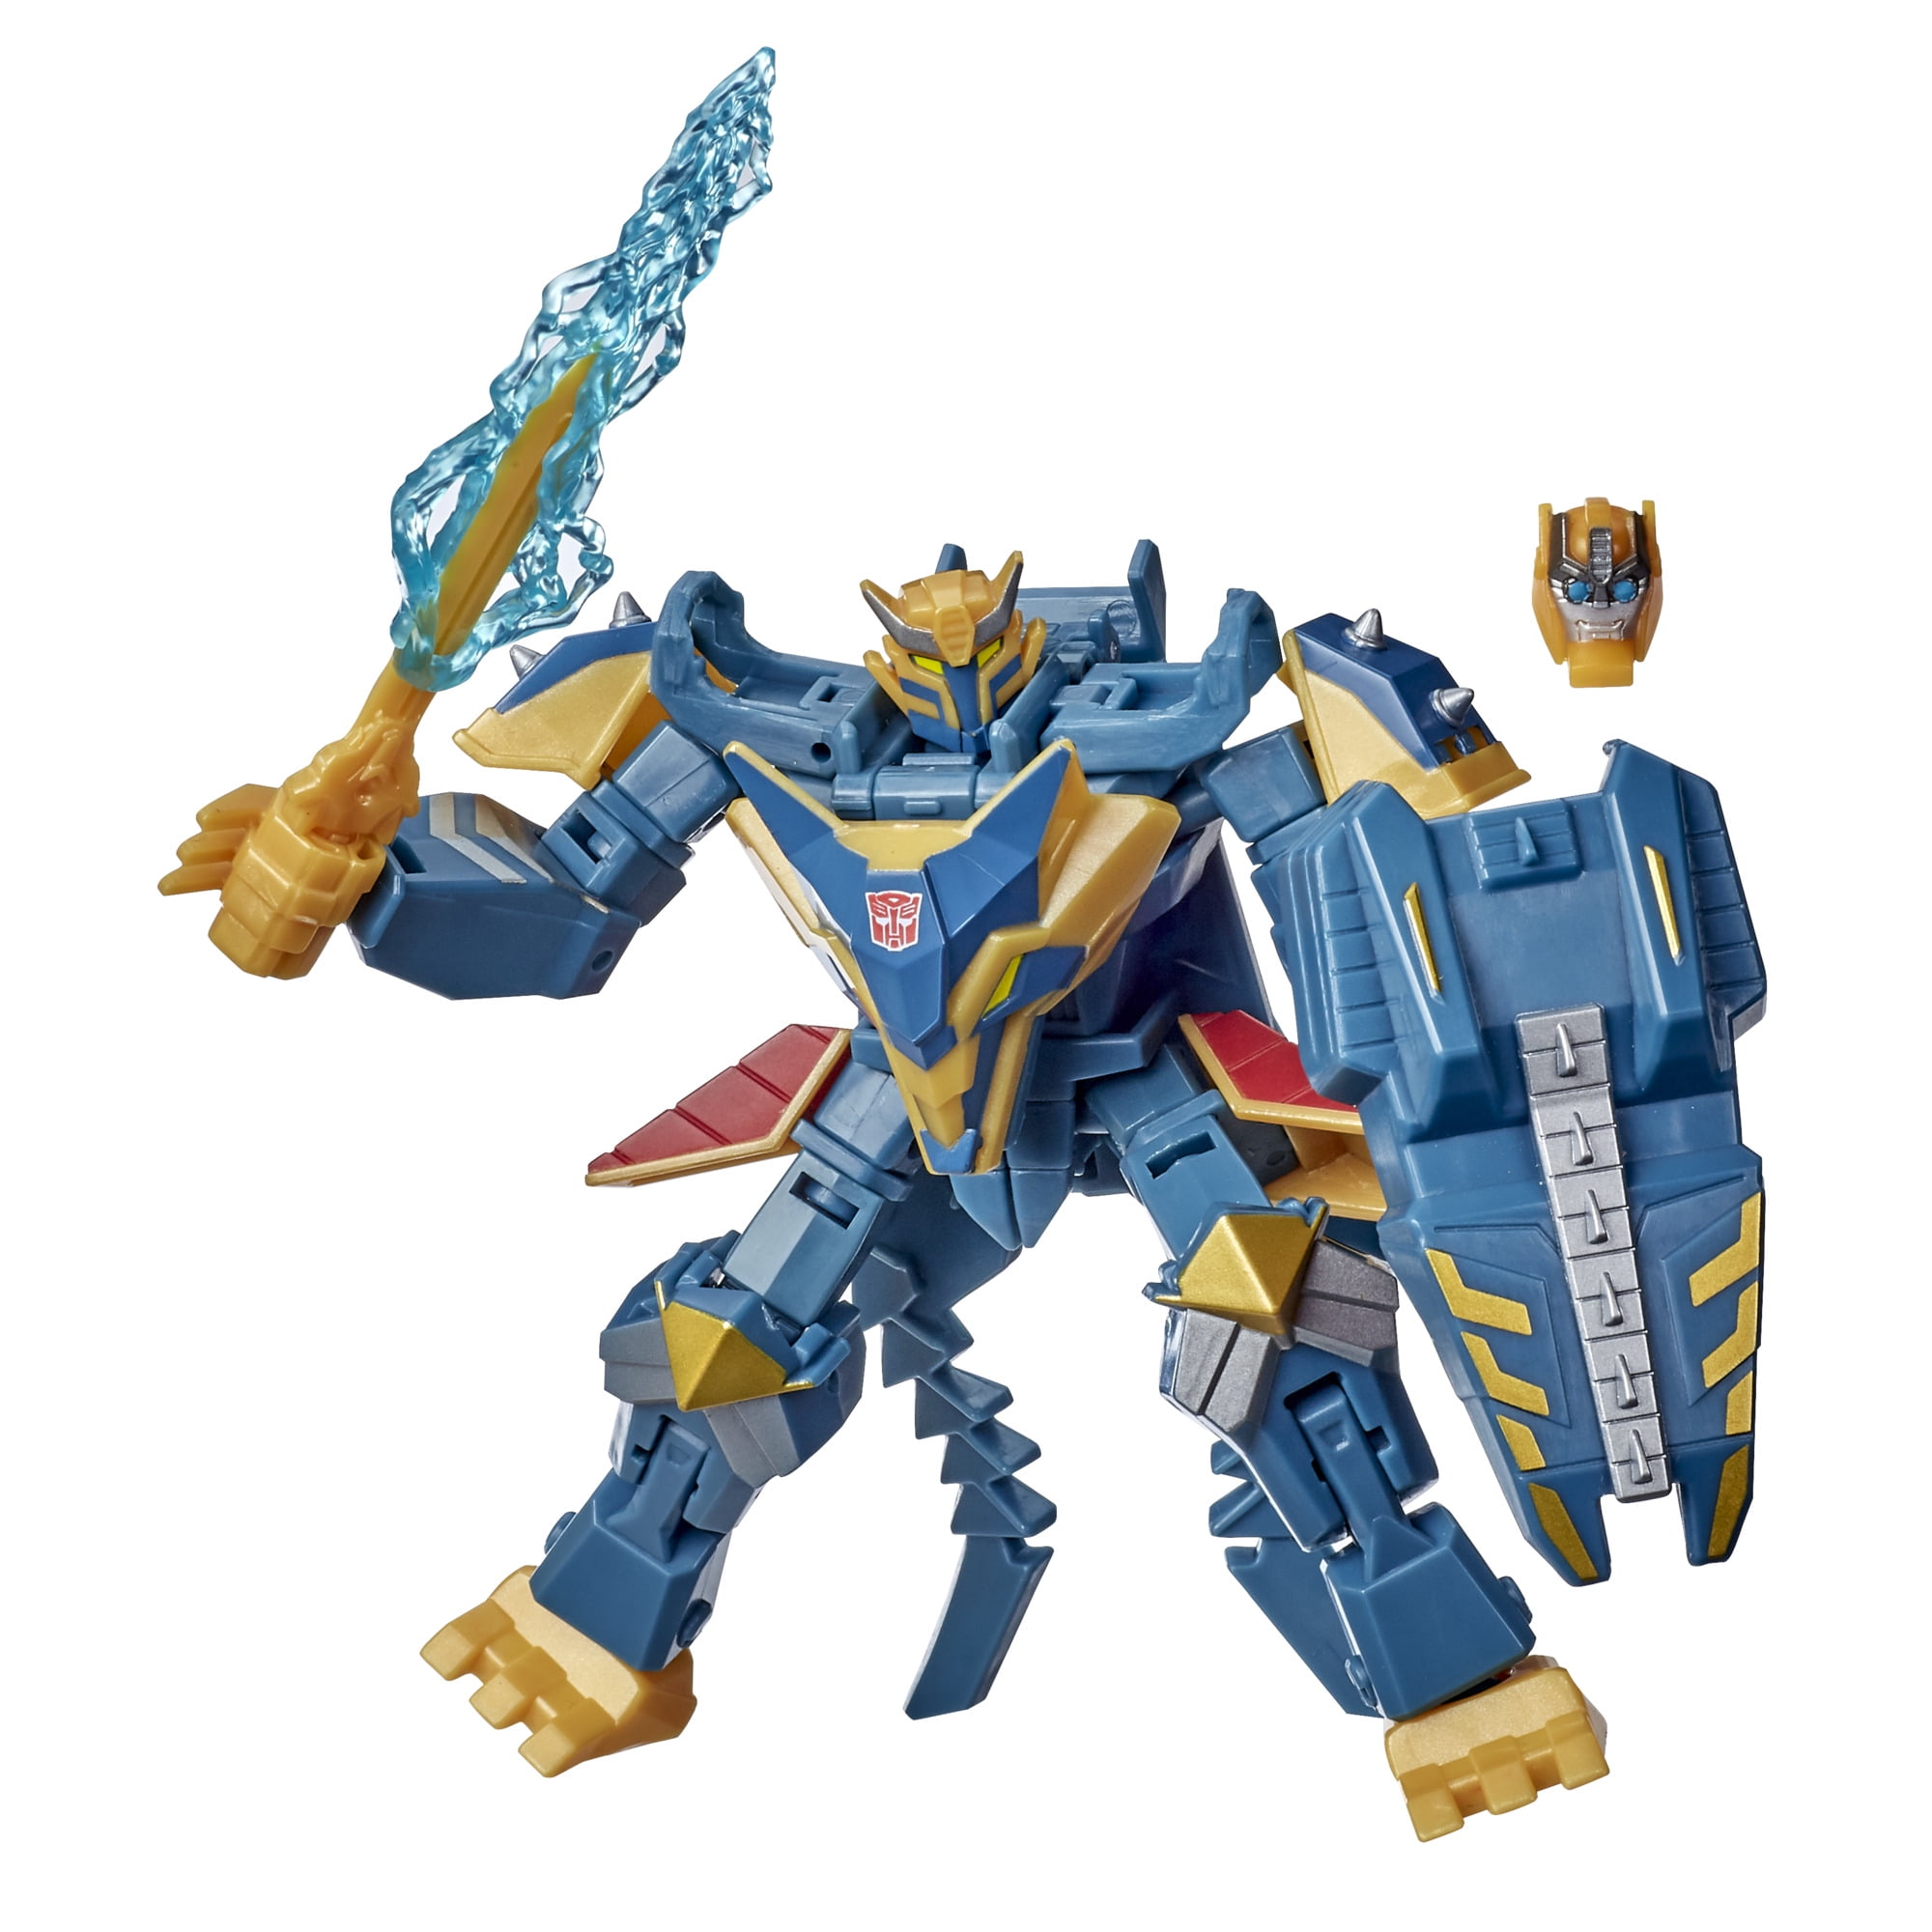 Transformers Cyberverse Prowl Bumblebee Energon Igniters Power Series  Lot of 2